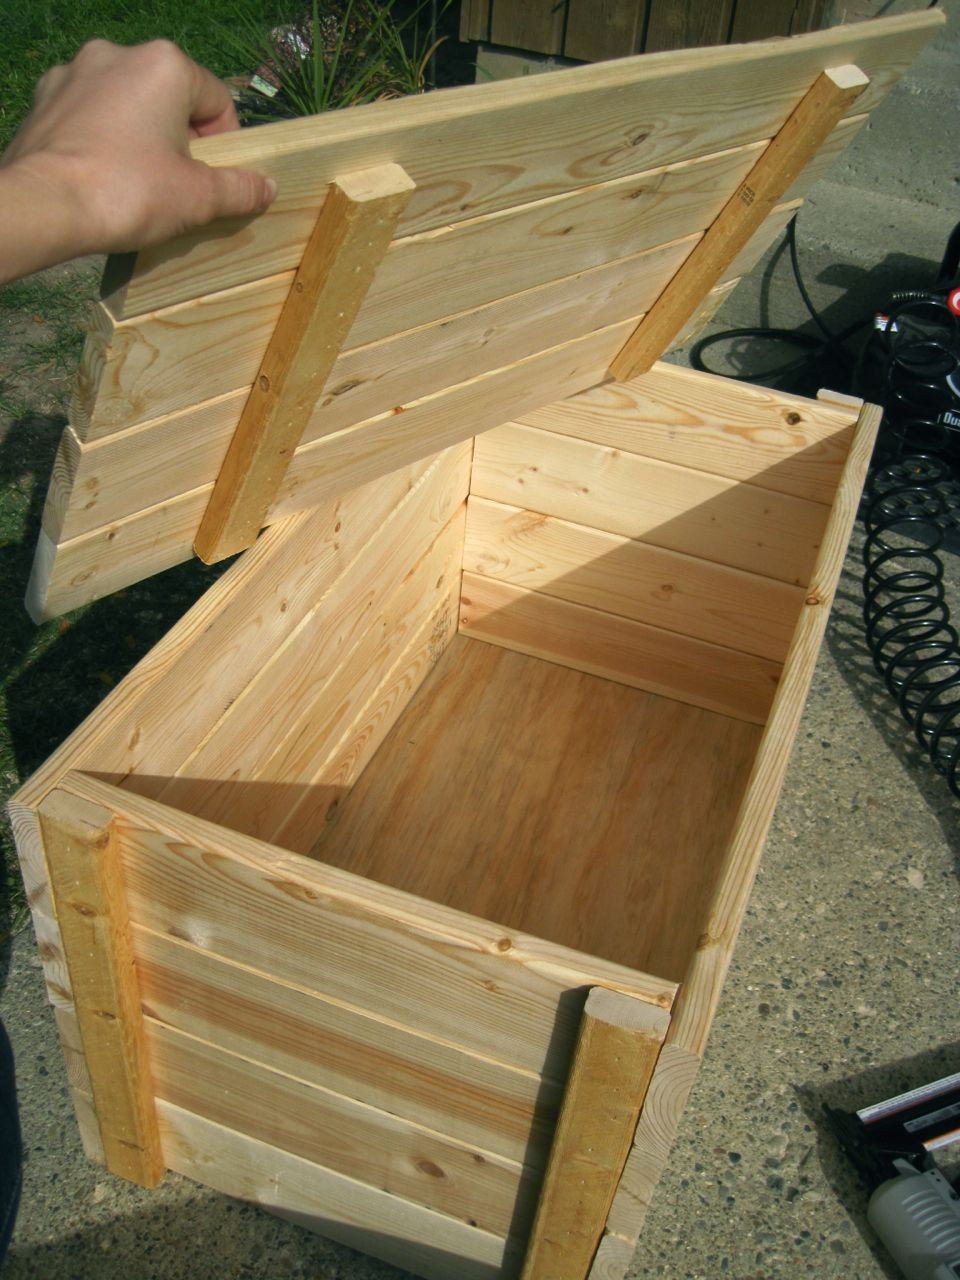 Best ideas about DIY Wooden Storage Box Plans
. Save or Pin Best 25 Wood storage box ideas on Pinterest Now.